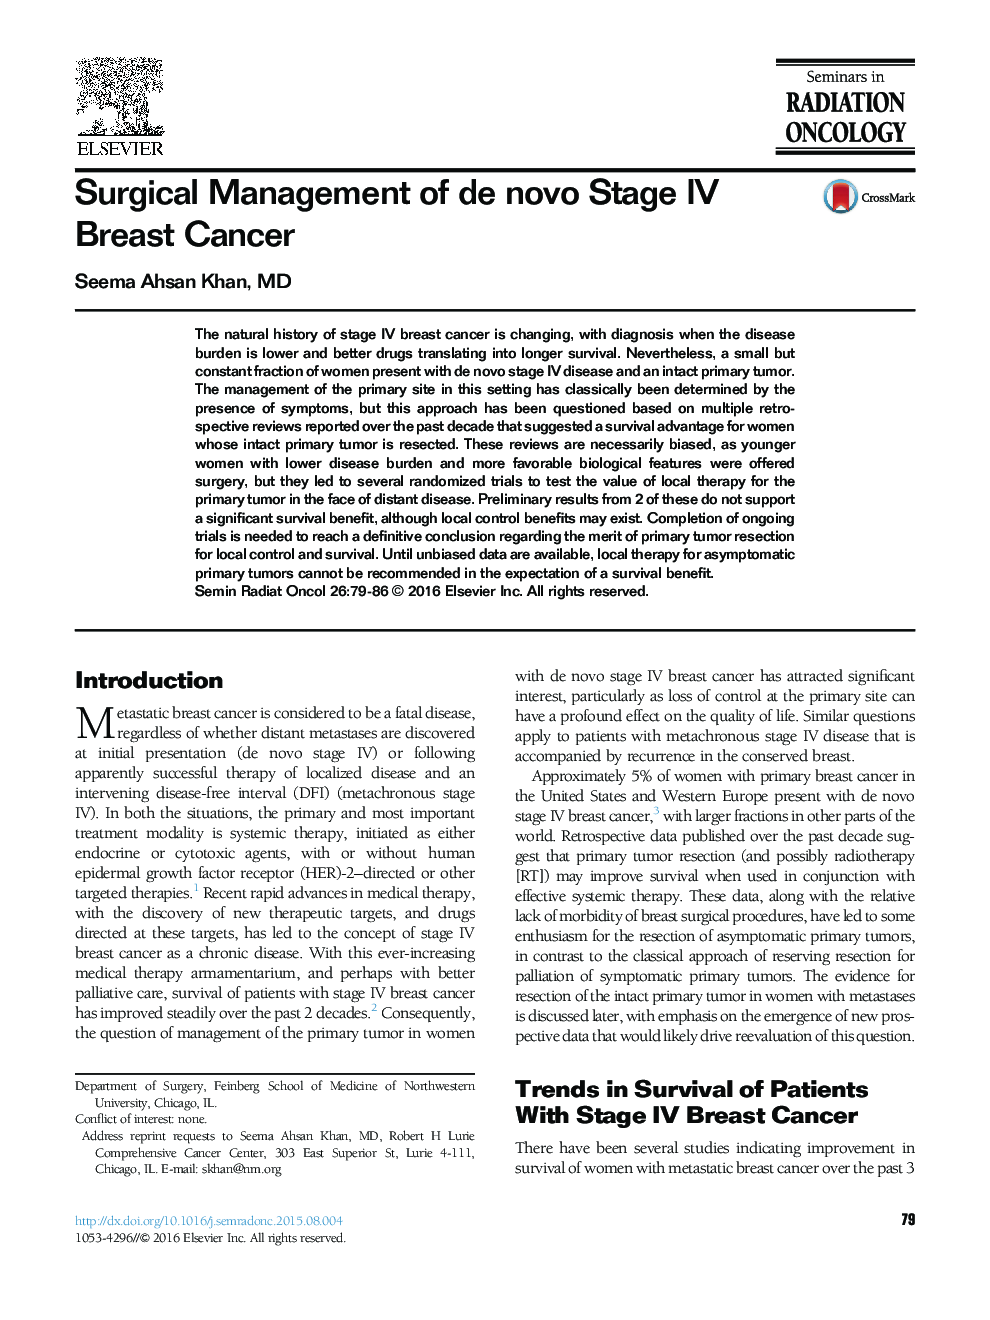 مدیریت جراحی سرطان پستان مرحله IV سر نو 